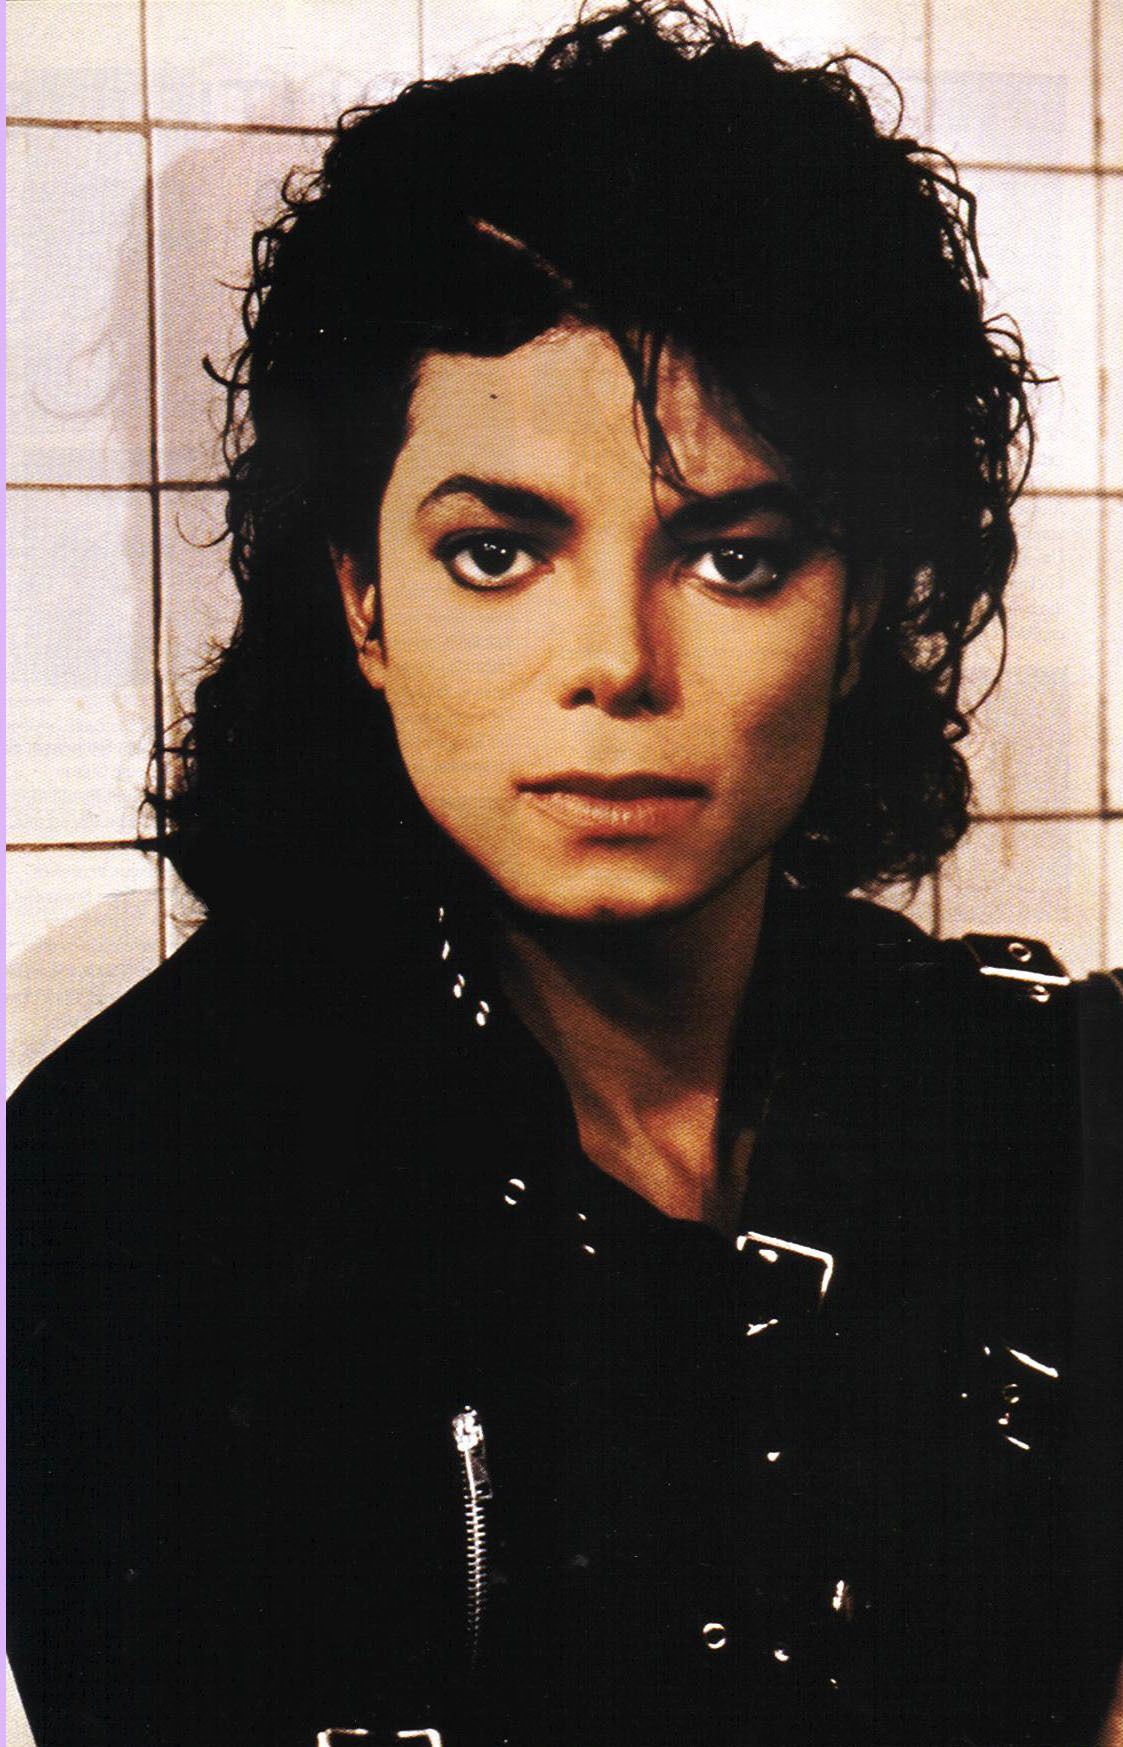 Michael Ray Wallpaper. Michael Jordan HD Wallpaper, Michael Jackson Moving Wallpaper and Michael Myers Wallpaper